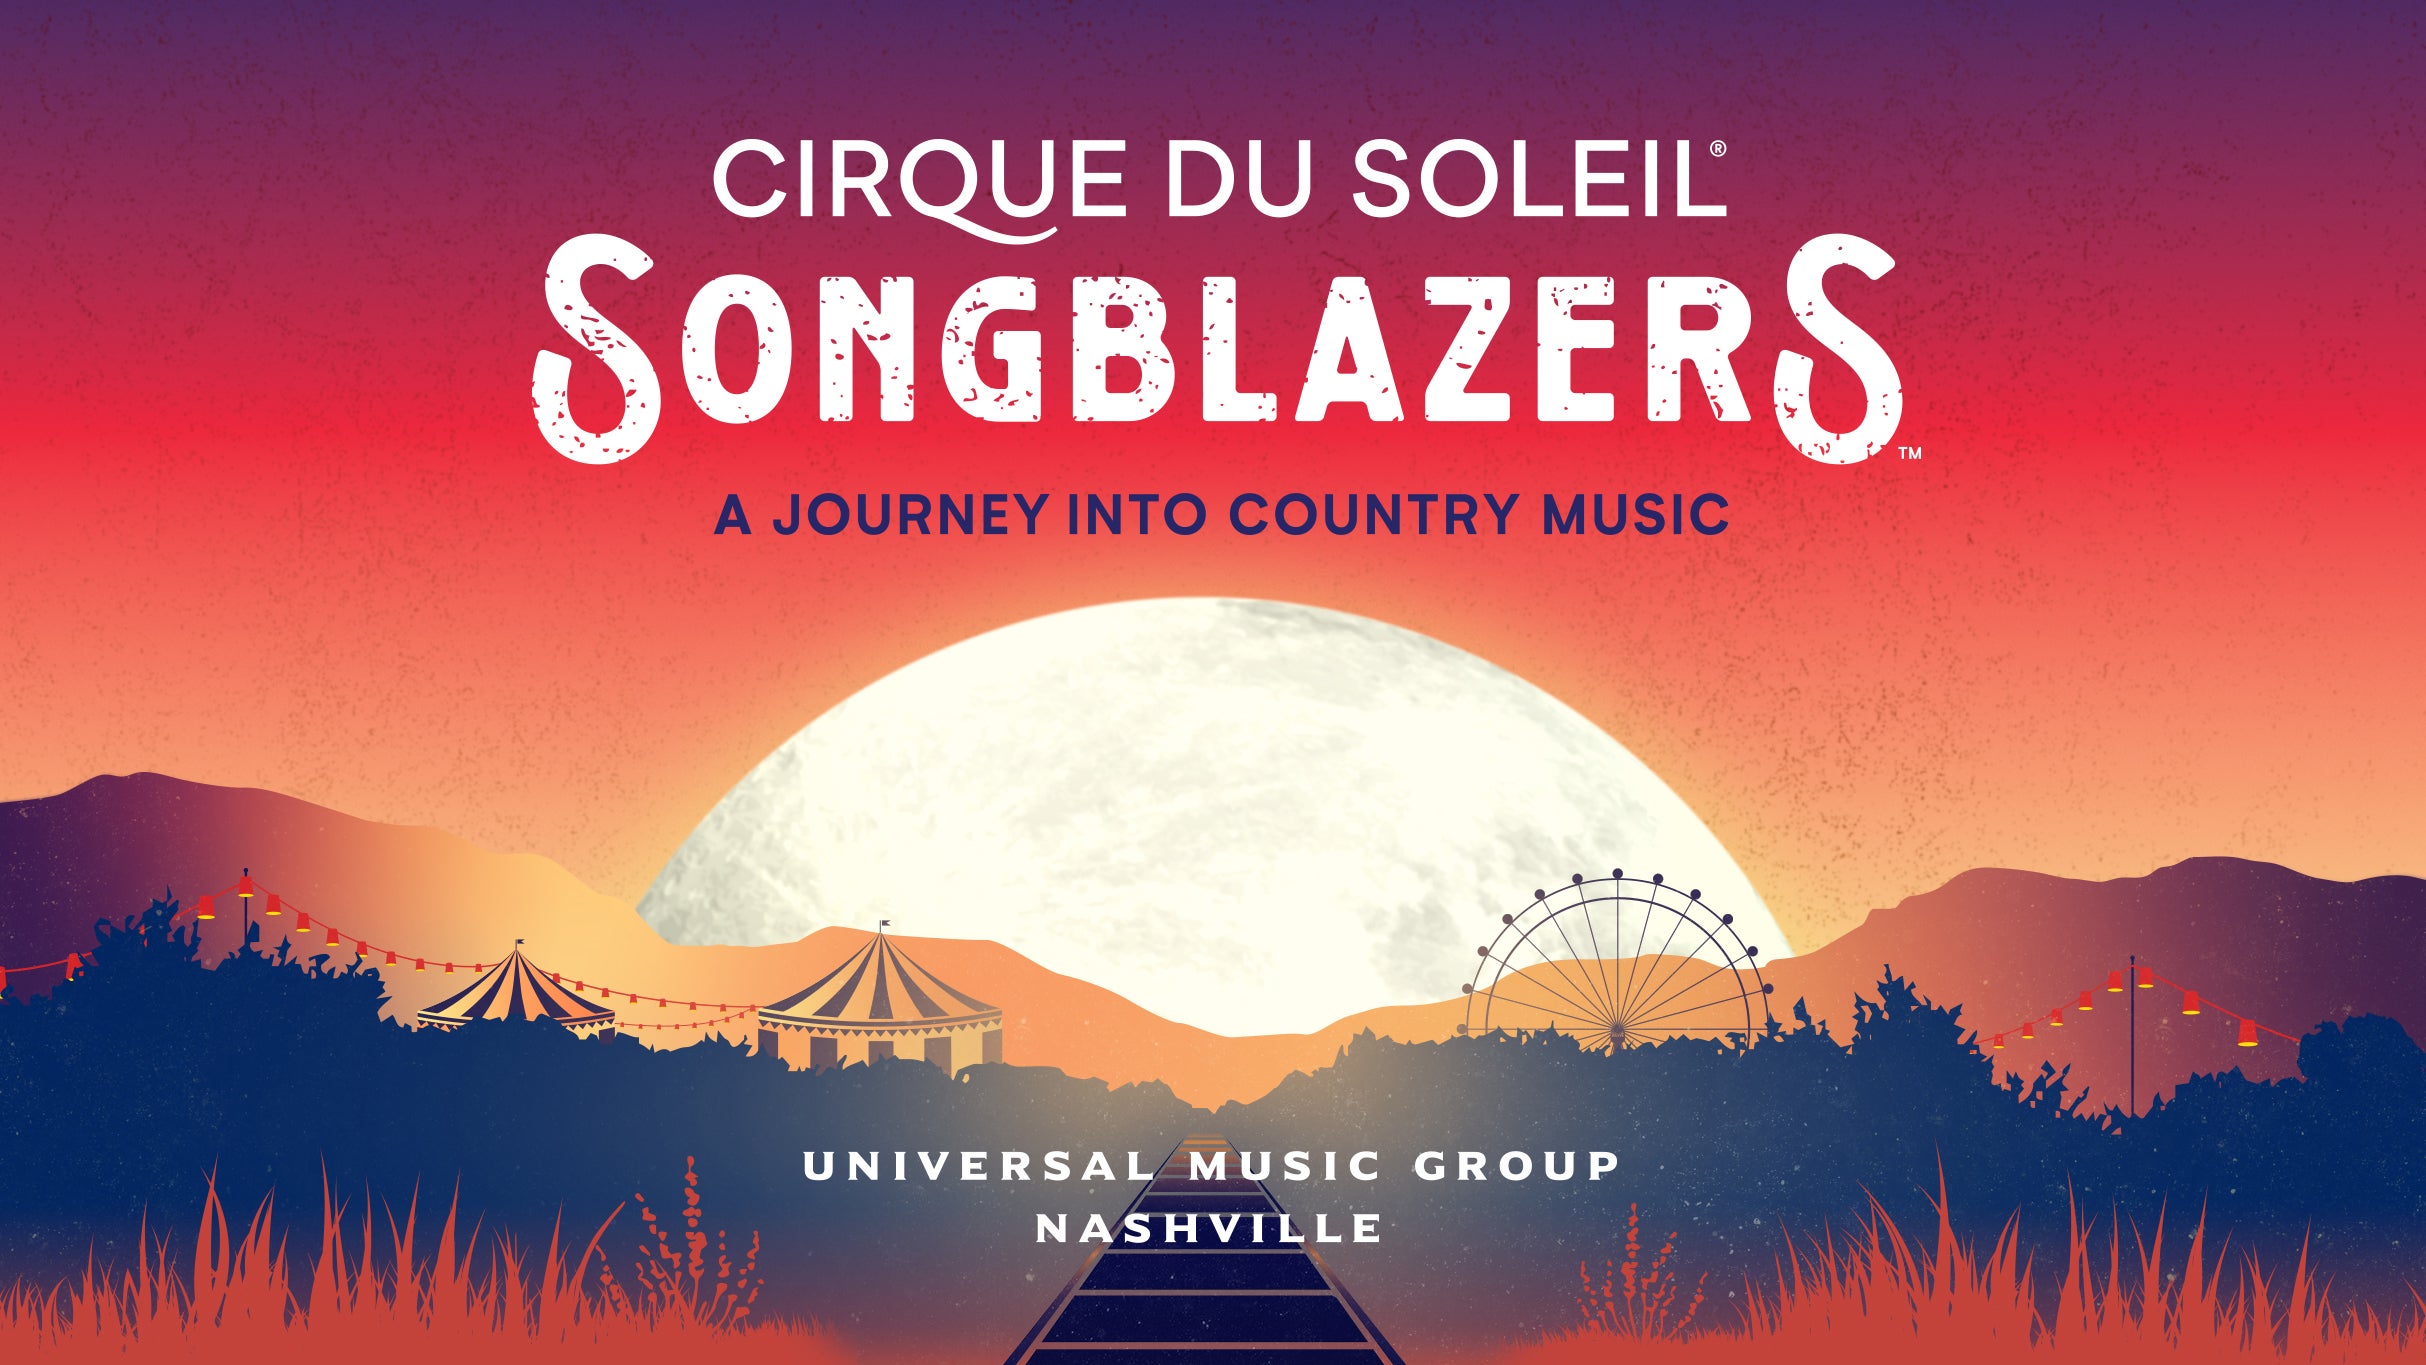 Cirque du Soleil: Songblazers in Dallas promo photo for Social presale offer code